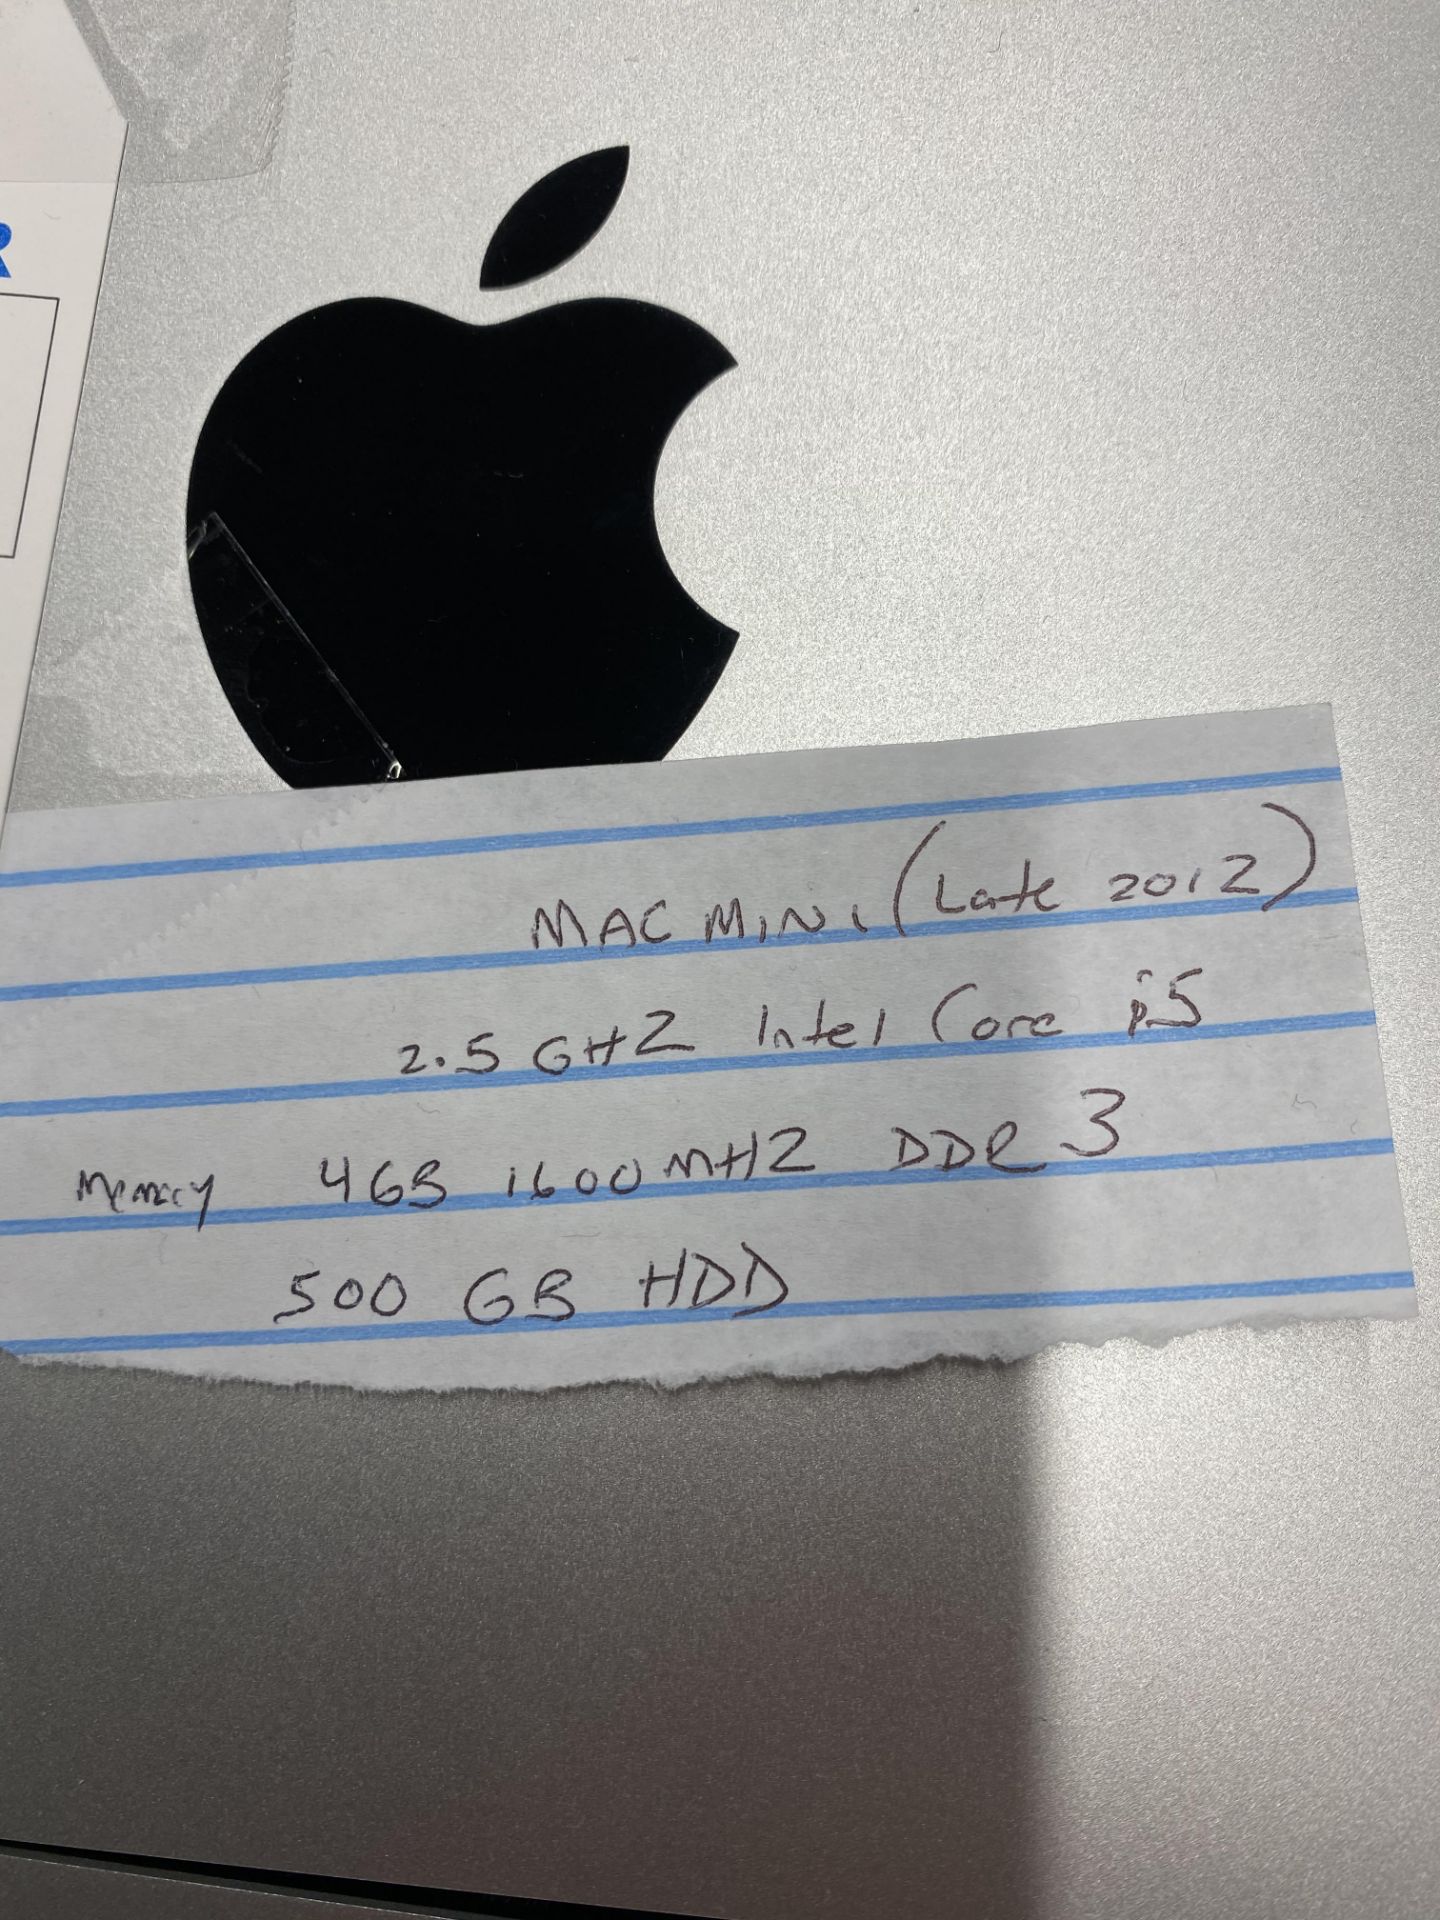 Apple Mac Mini (Late 2012) 2.5Ghz, Core i5, 4GB Ram, DDR 3 Desktop PC